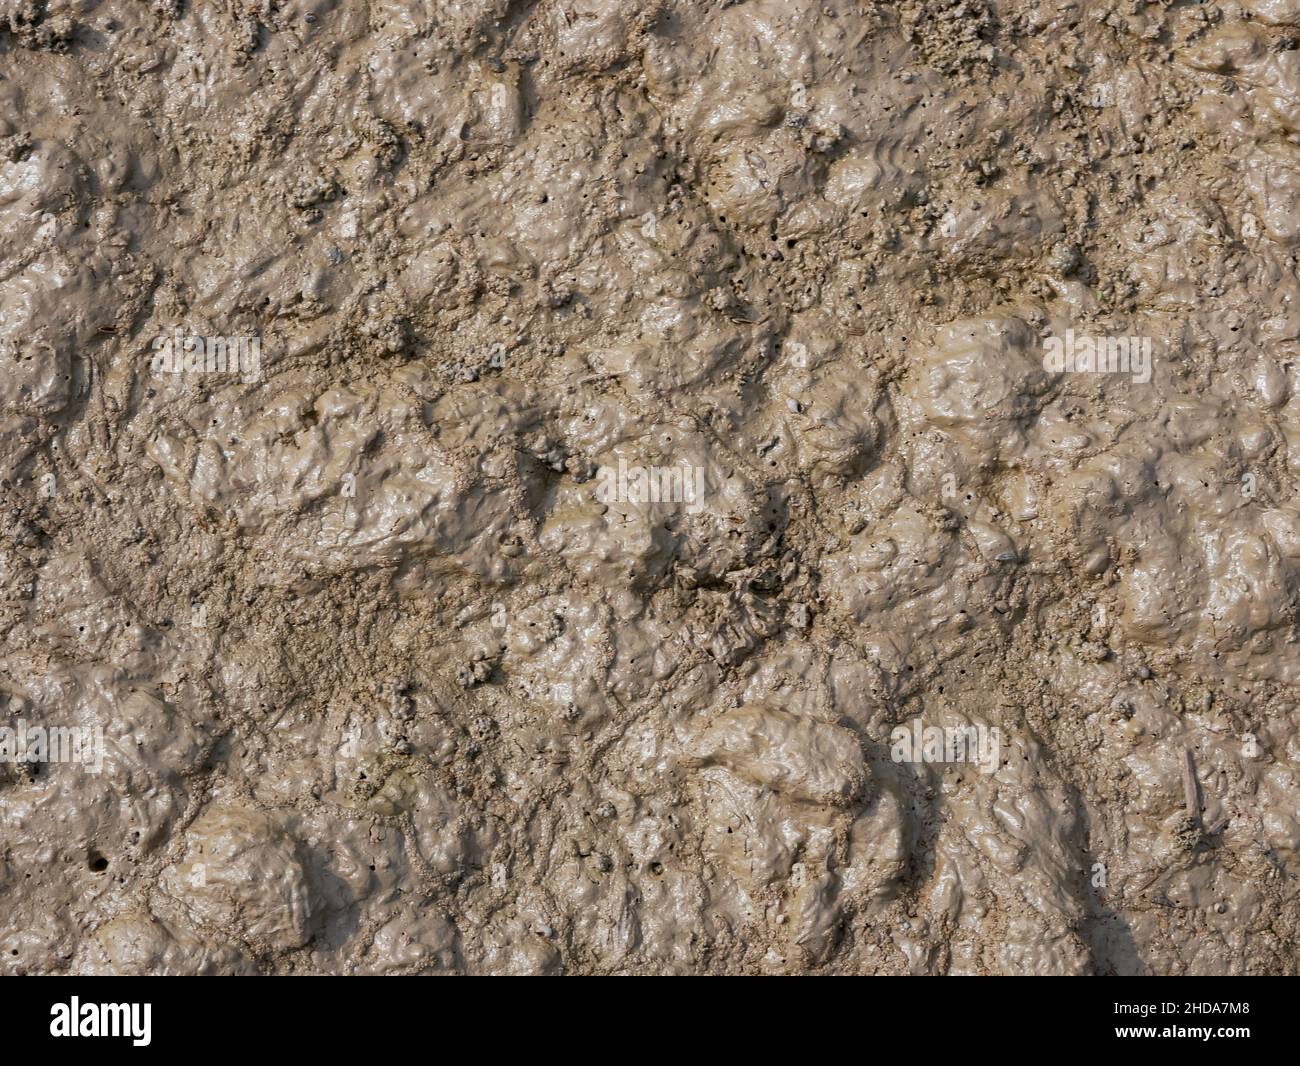 wet dry brown soil texture. Stock Photo